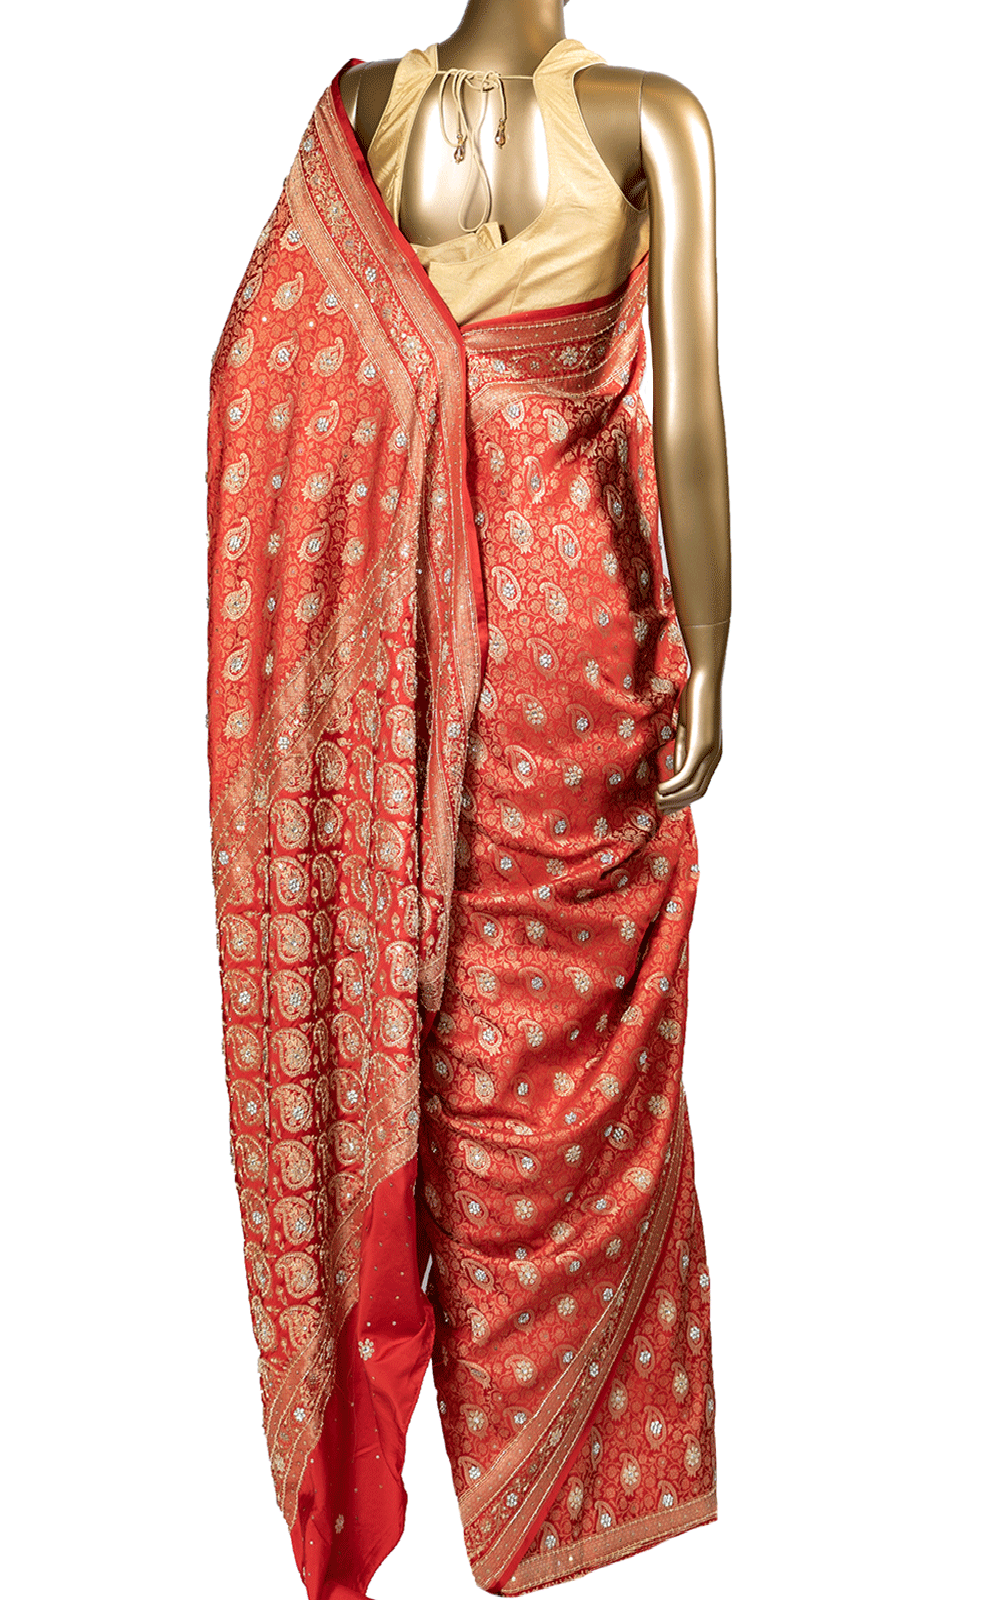 Red Banarsi Silk Saree with Stone Embroidery